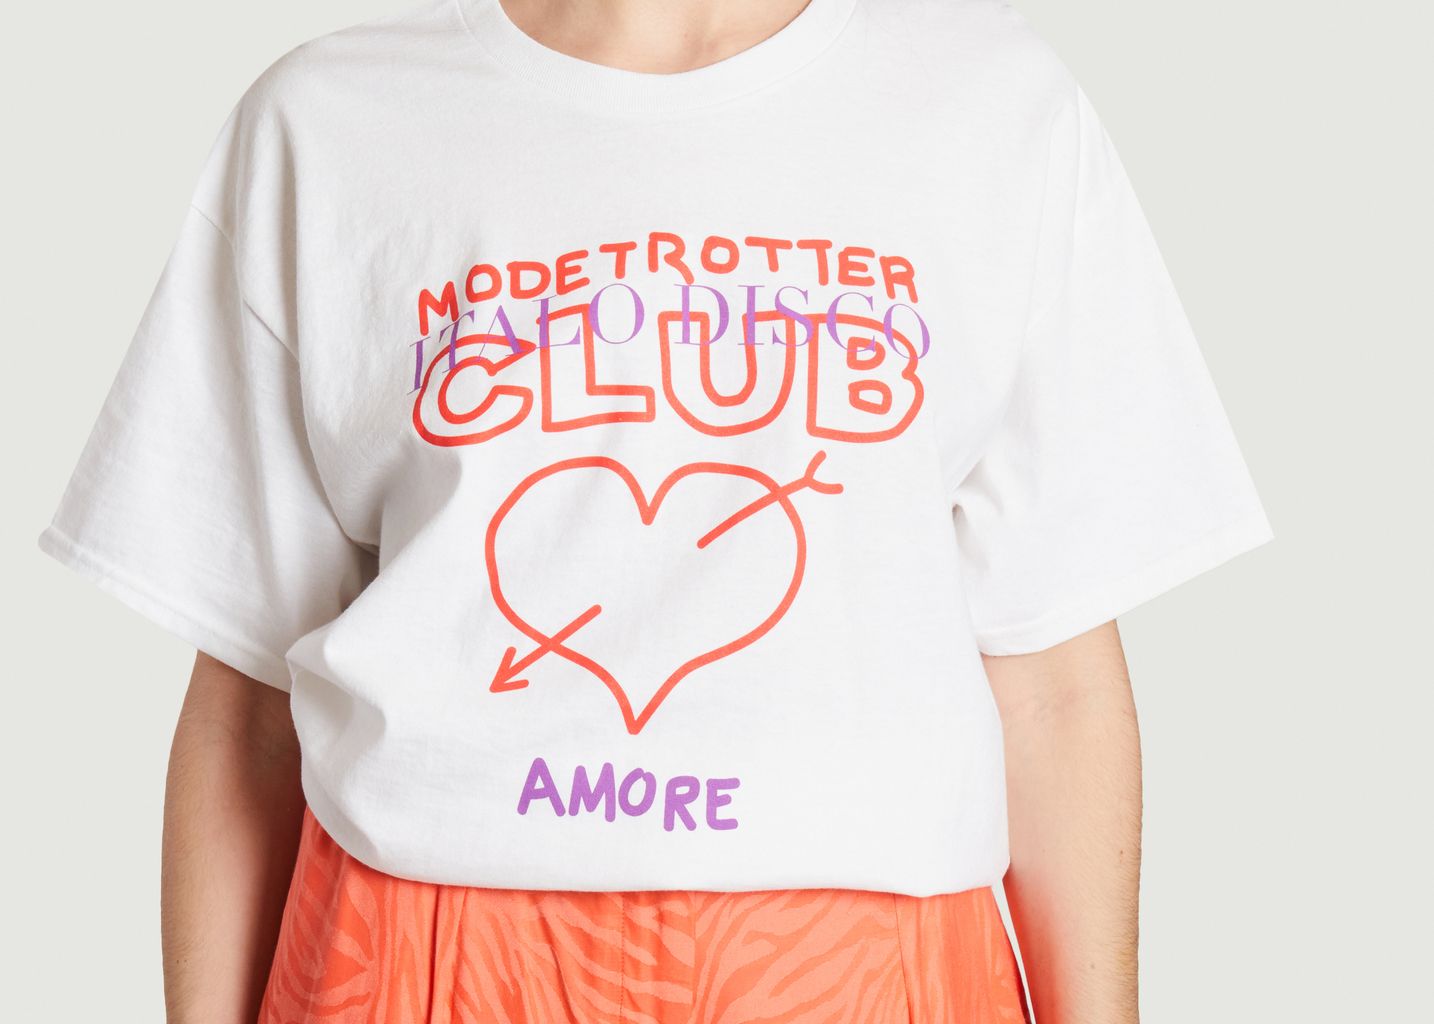 Amore T-shirt - Modetrotter